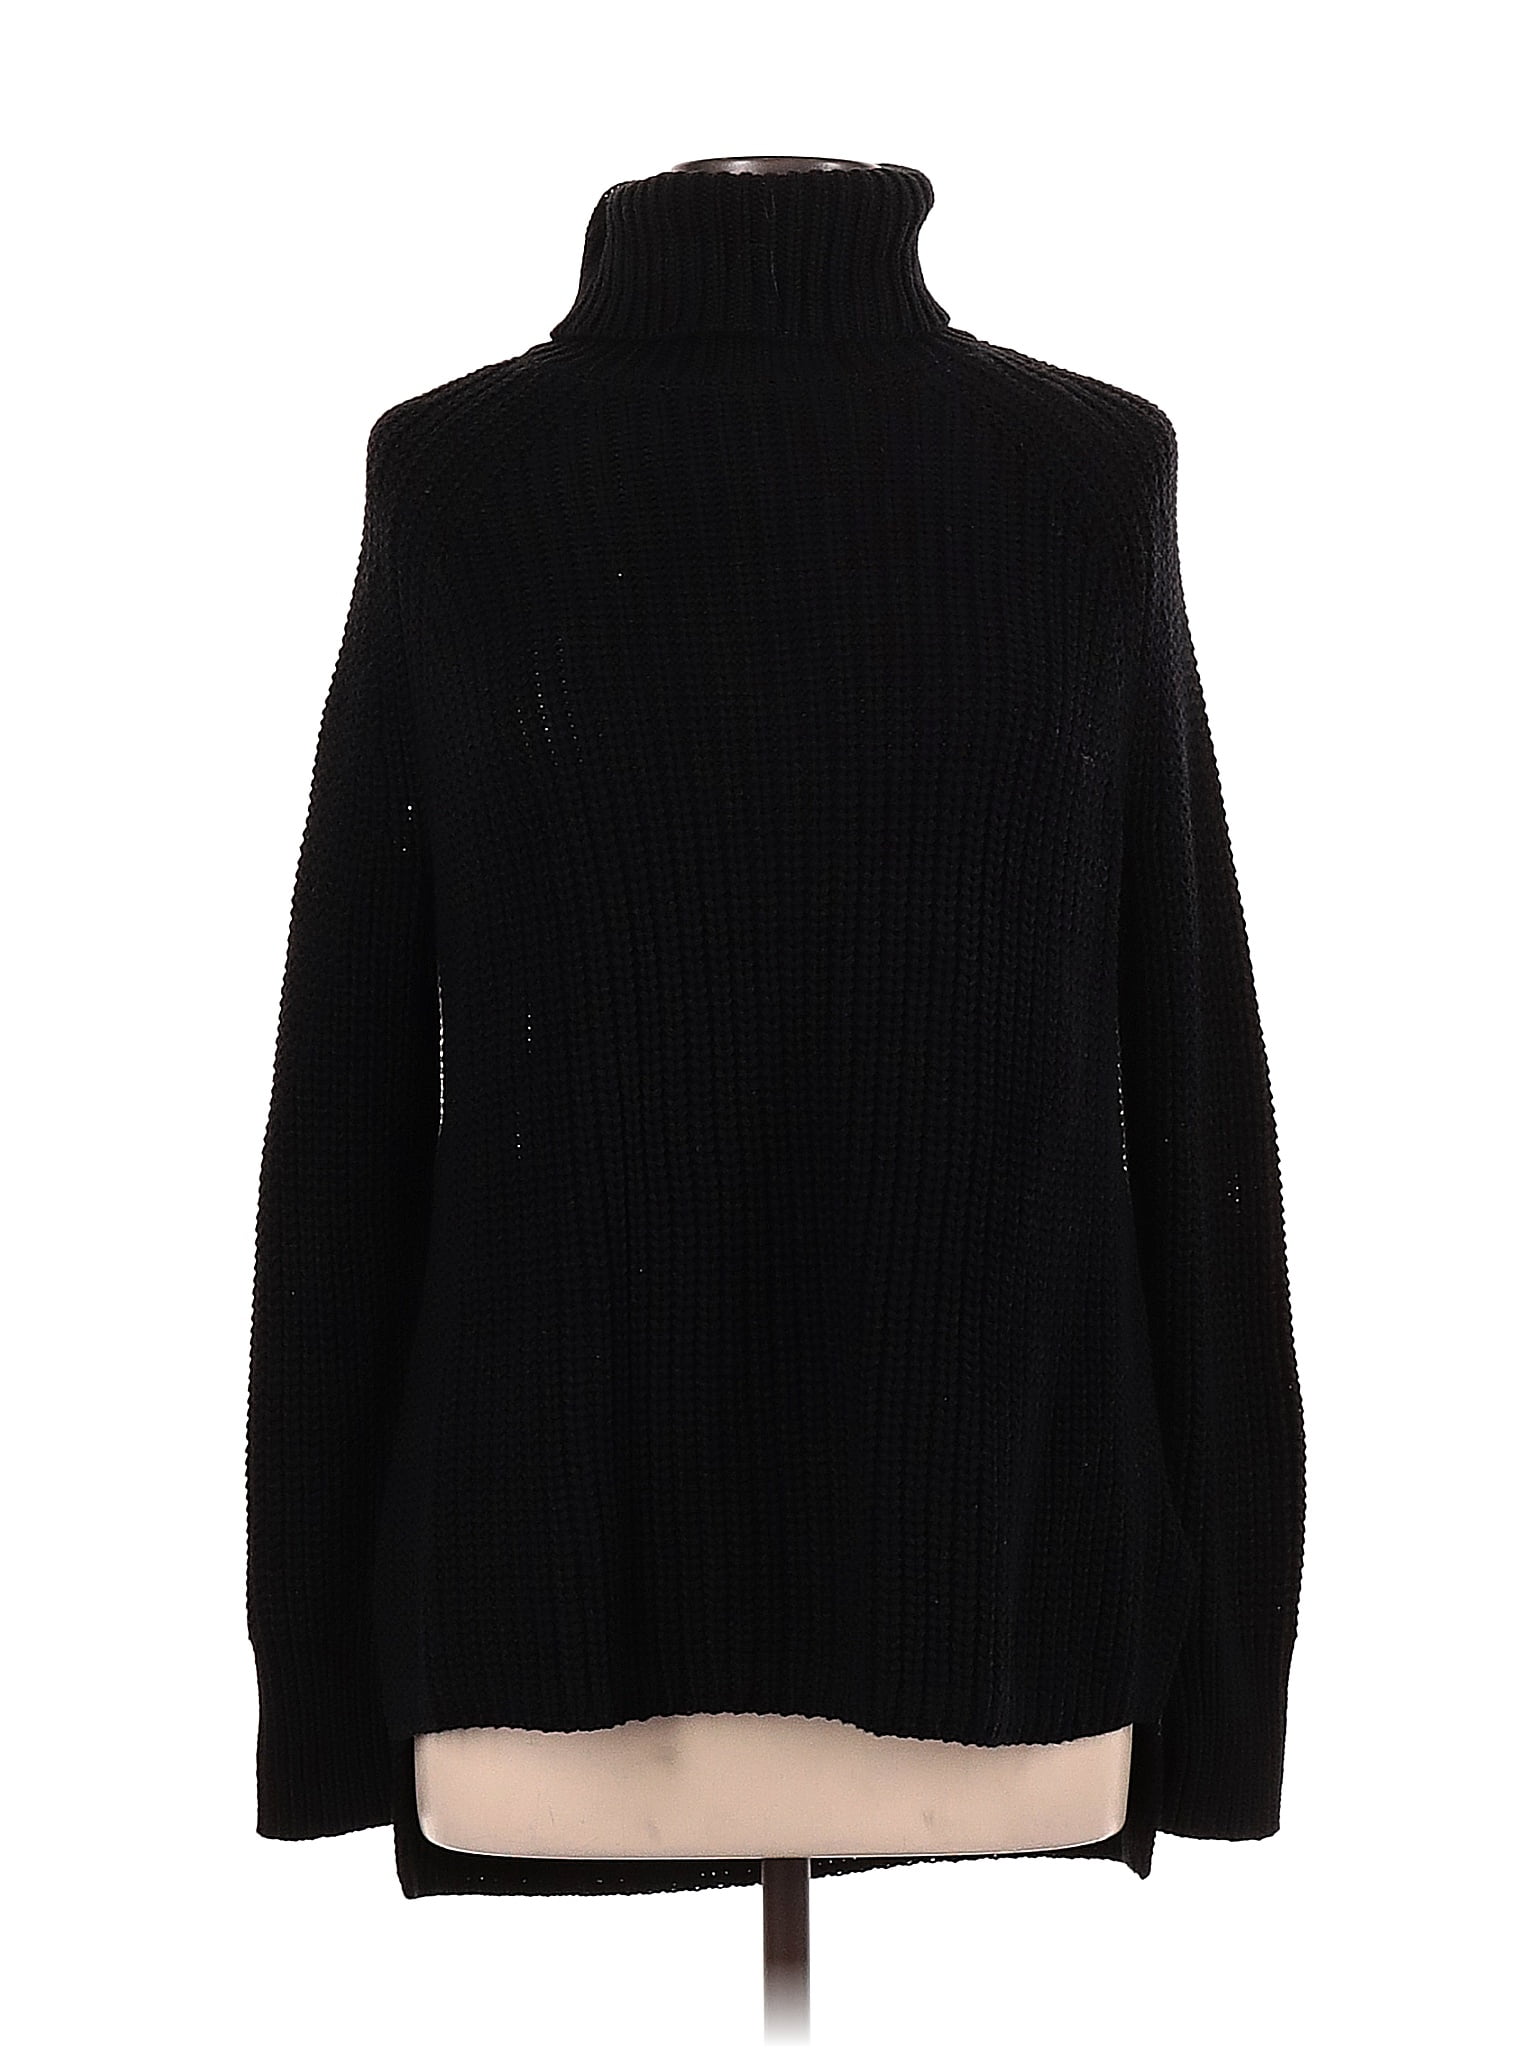 525 America 100% Cotton Black Pullover Sweater Size M - 79% off | thredUP